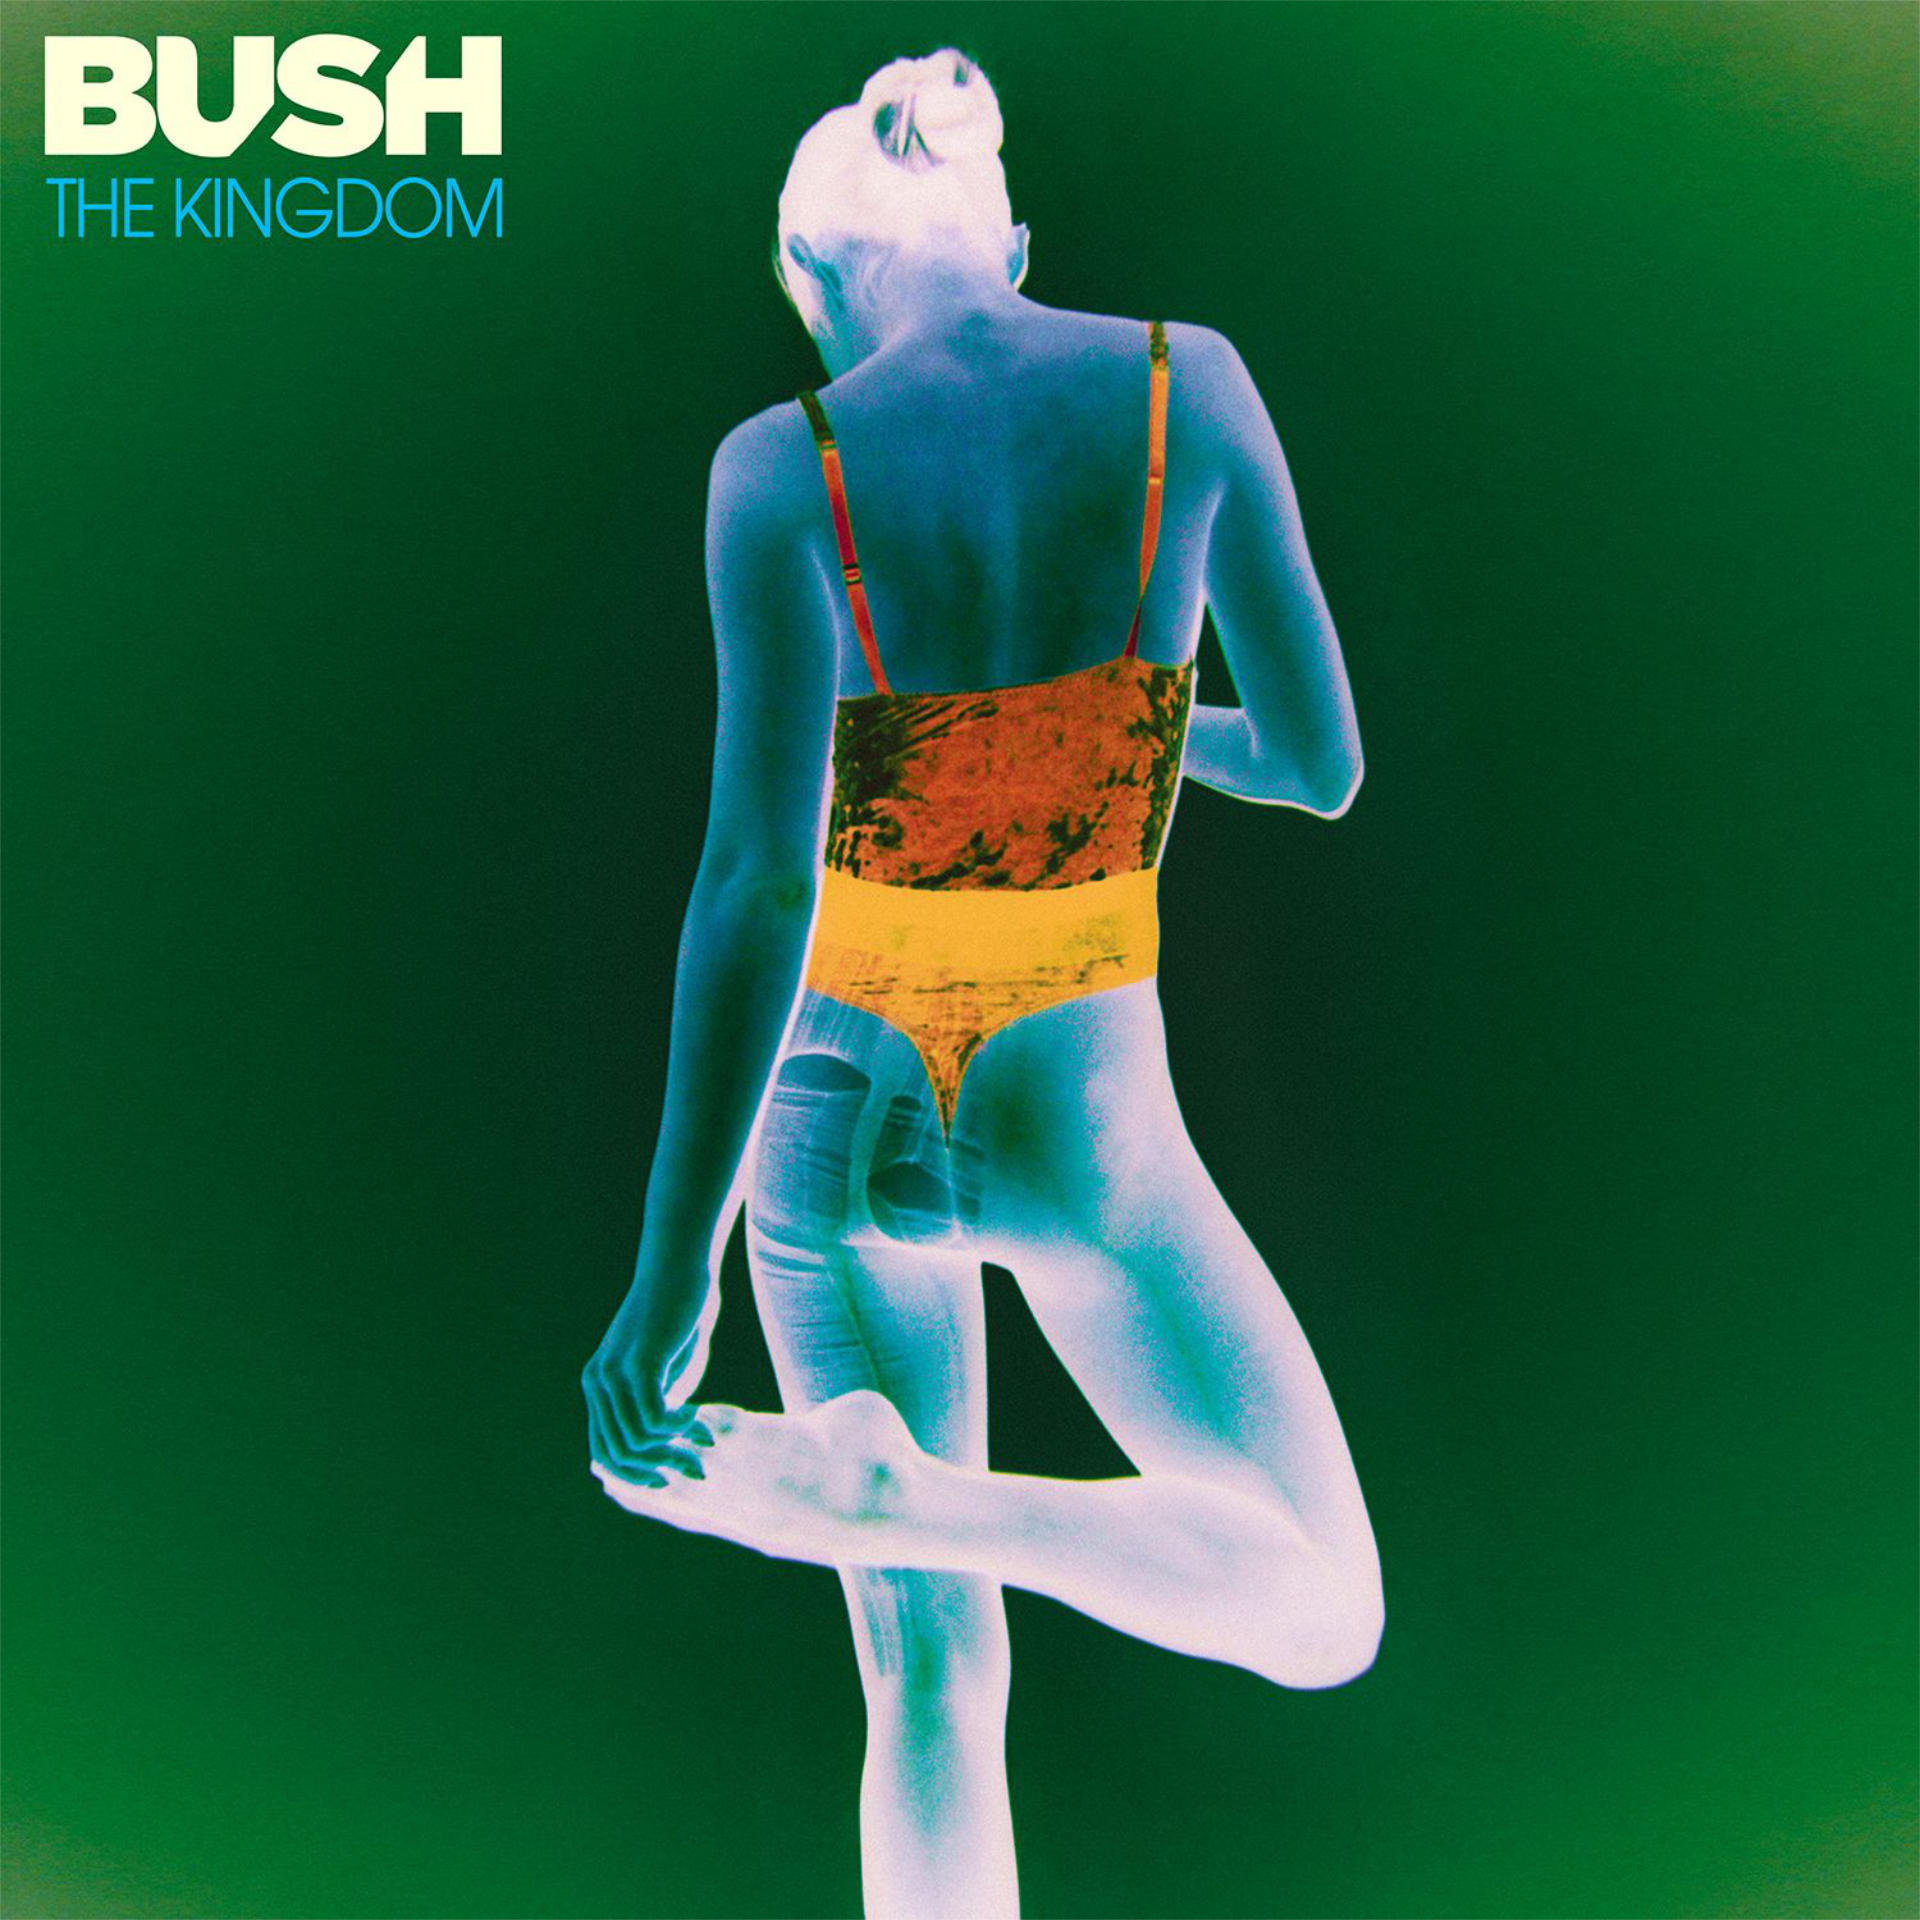 Music Monday - Bush - The Kingdom - New Music - New Album Release